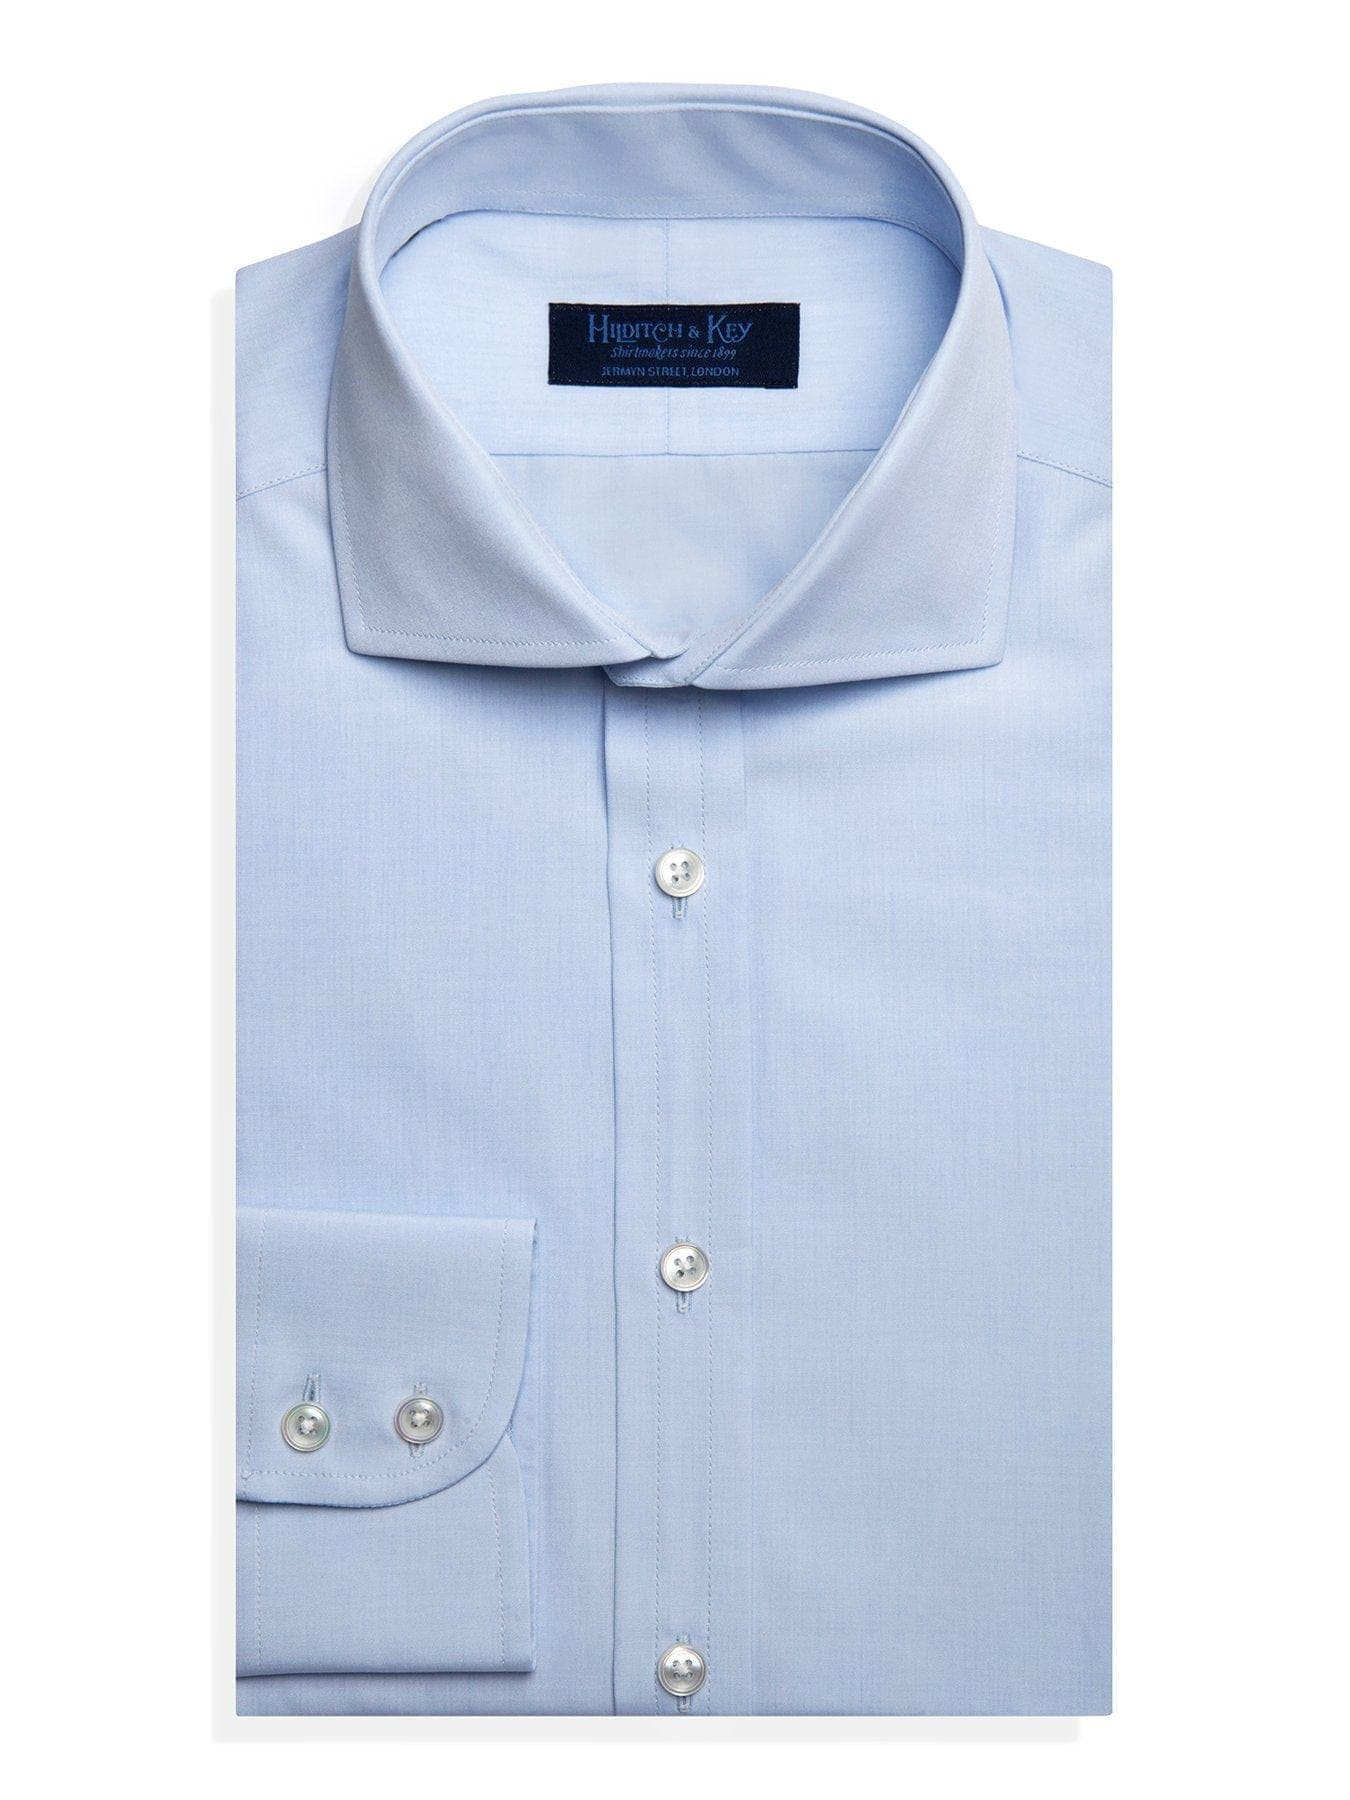 Contemporary Fit, Cut-away Collar, 2 Button Cuff Shirt in a Plain Ice Blue Poplin Cotton